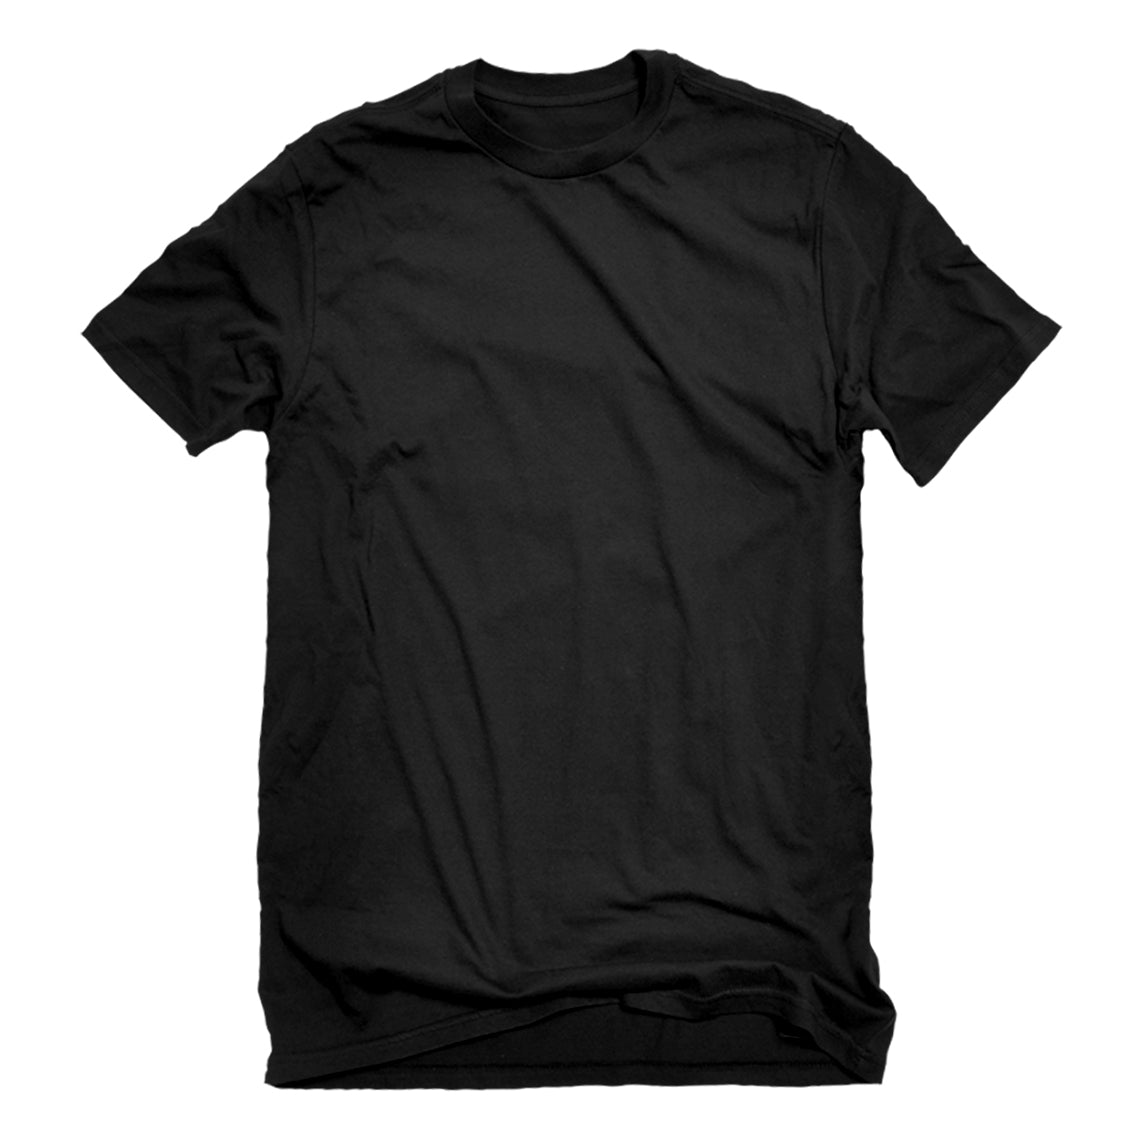 Mens Comfort Basics Unisex T-shirt